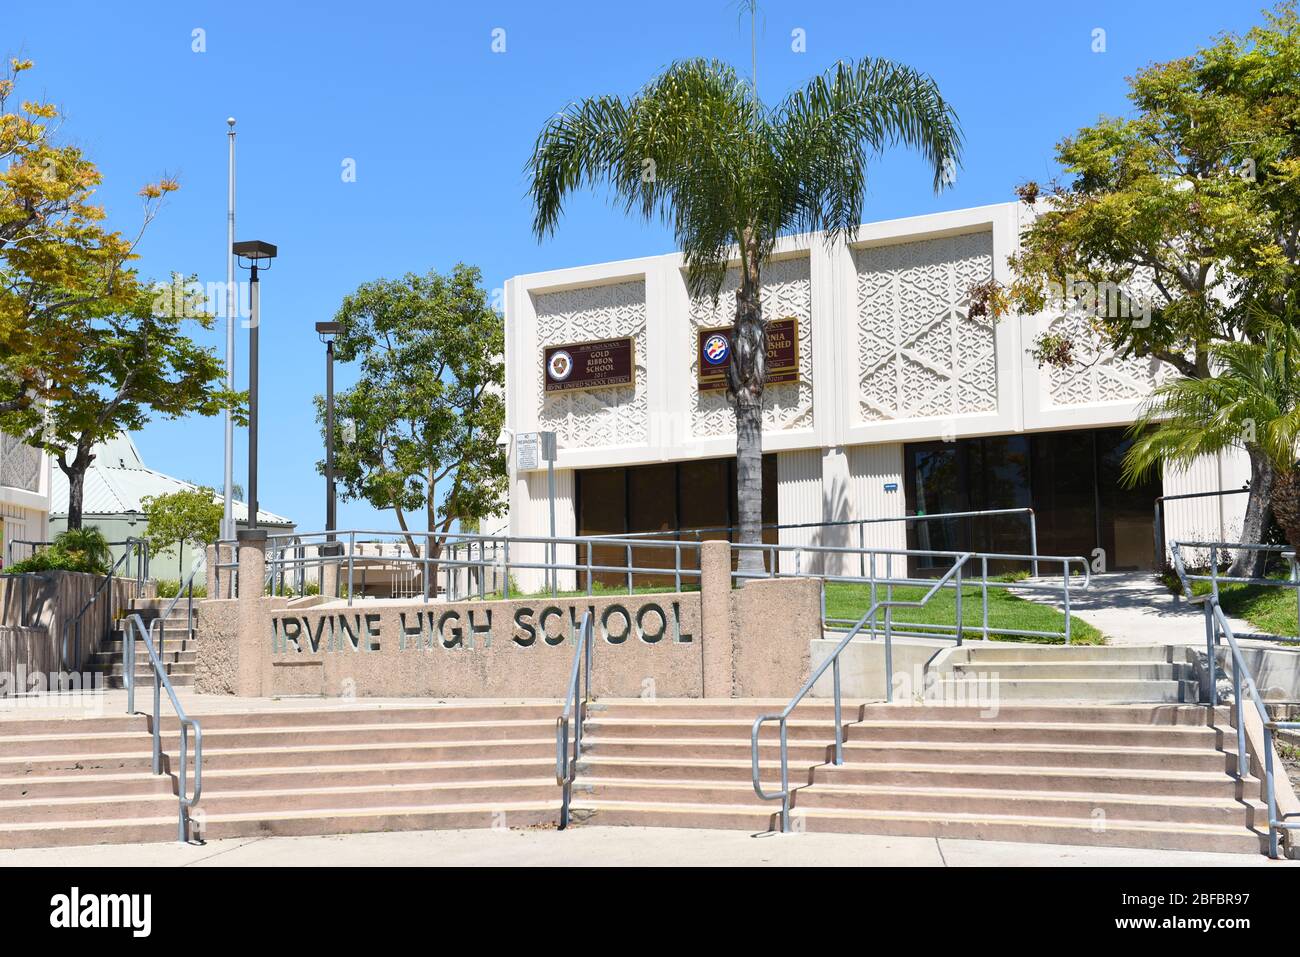 IRVINE, CALIFORNIA - 16 APRIL 2020: Irvine High School a top rated